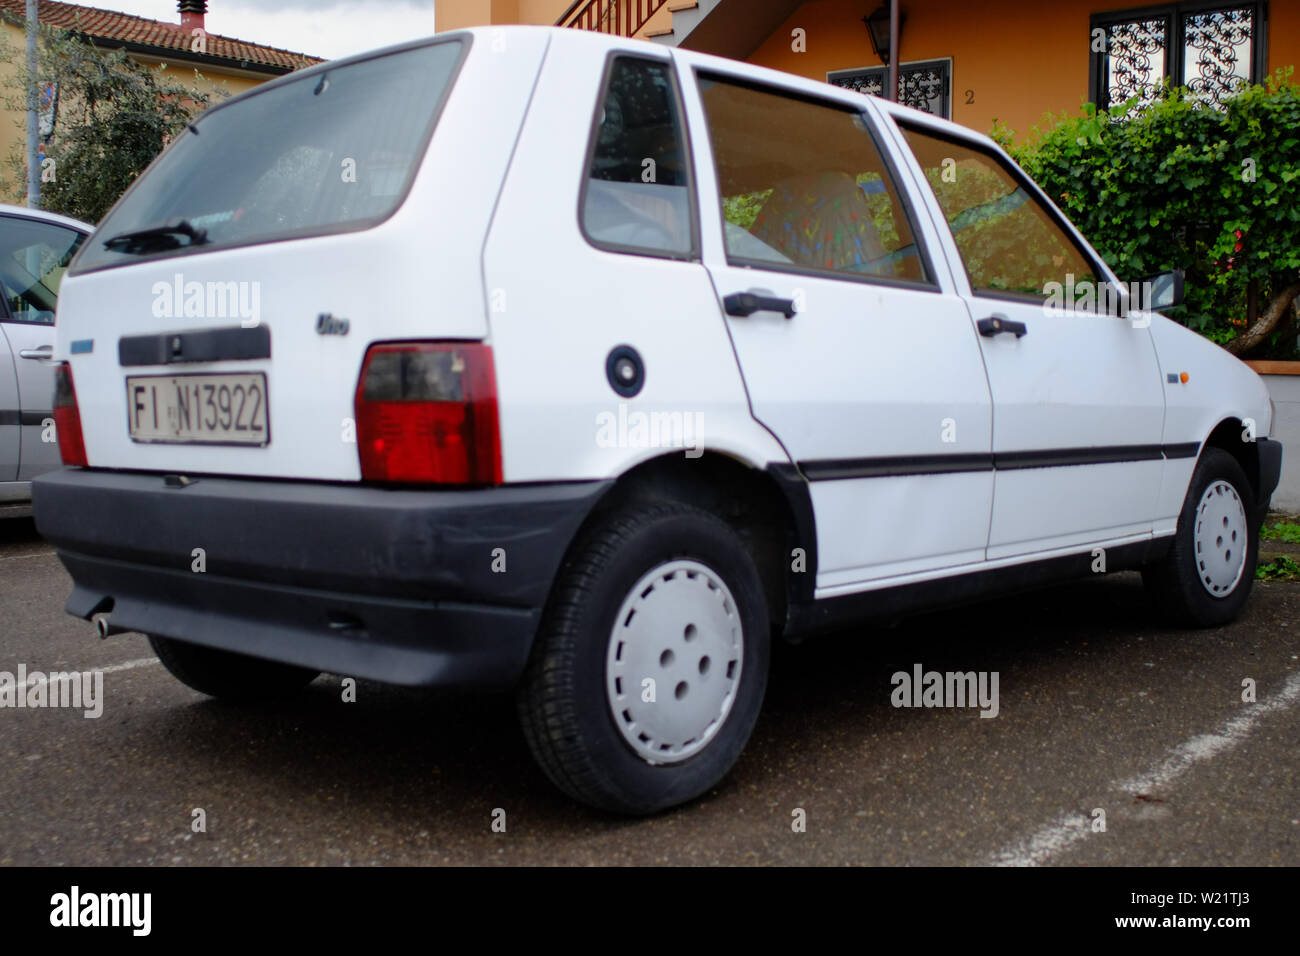 https://c8.alamy.com/comp/W21TJ3/vintage-white-fiat-uno-car-parked-in-a-urban-scenario-florence-italy-W21TJ3.jpg